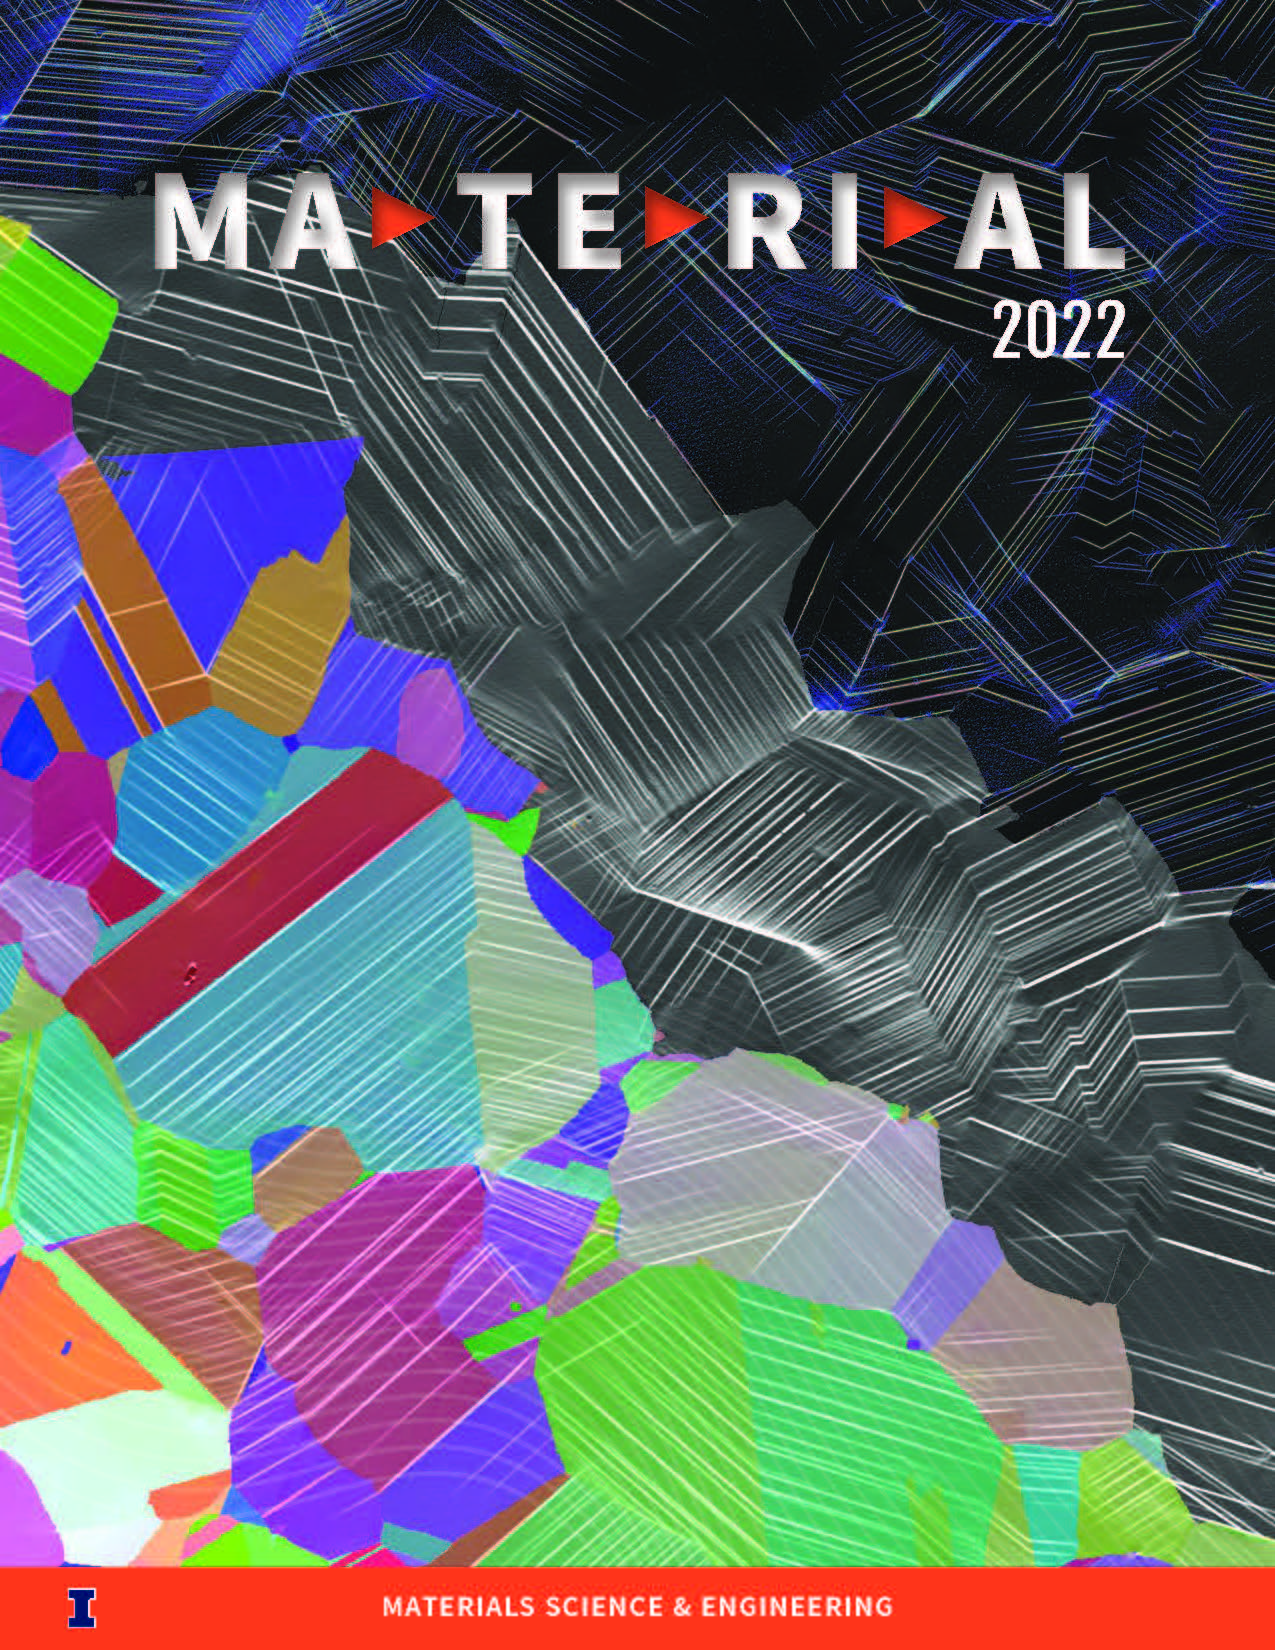 2022 Material Magazine Cover